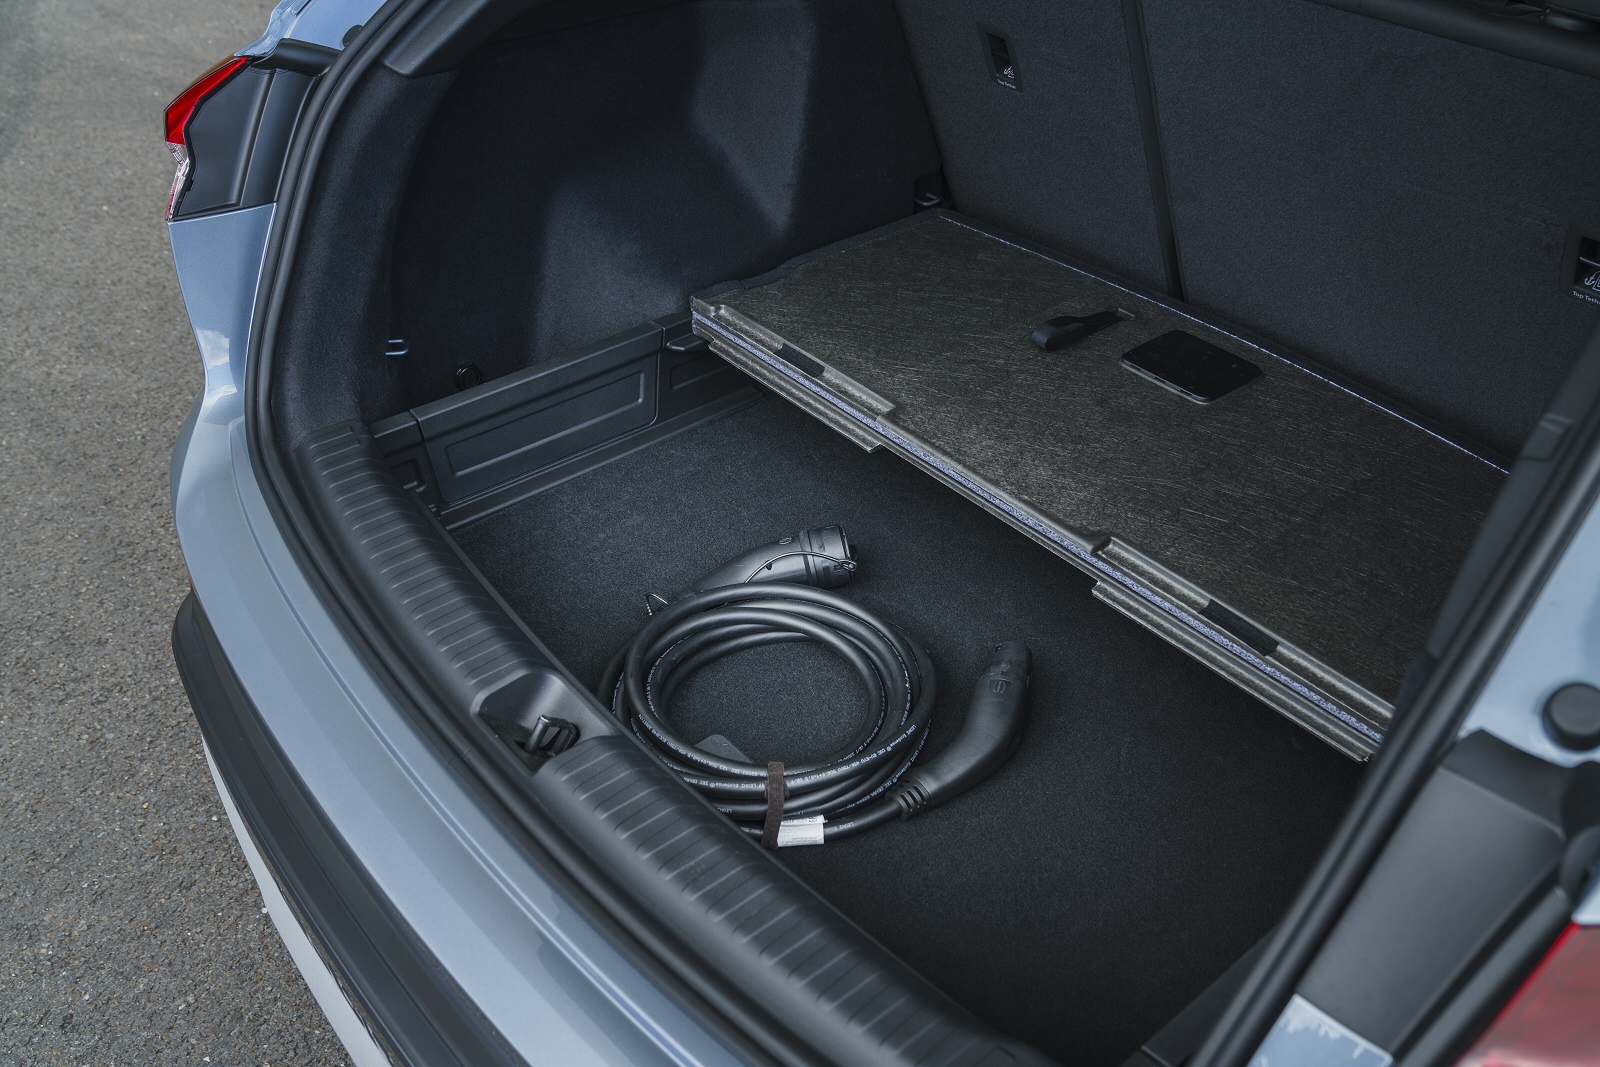 AUDI Q4 E-TRON ESTATE Sport 40 | 82 kWh [Comfort & Sound Pack + Tech Pack]